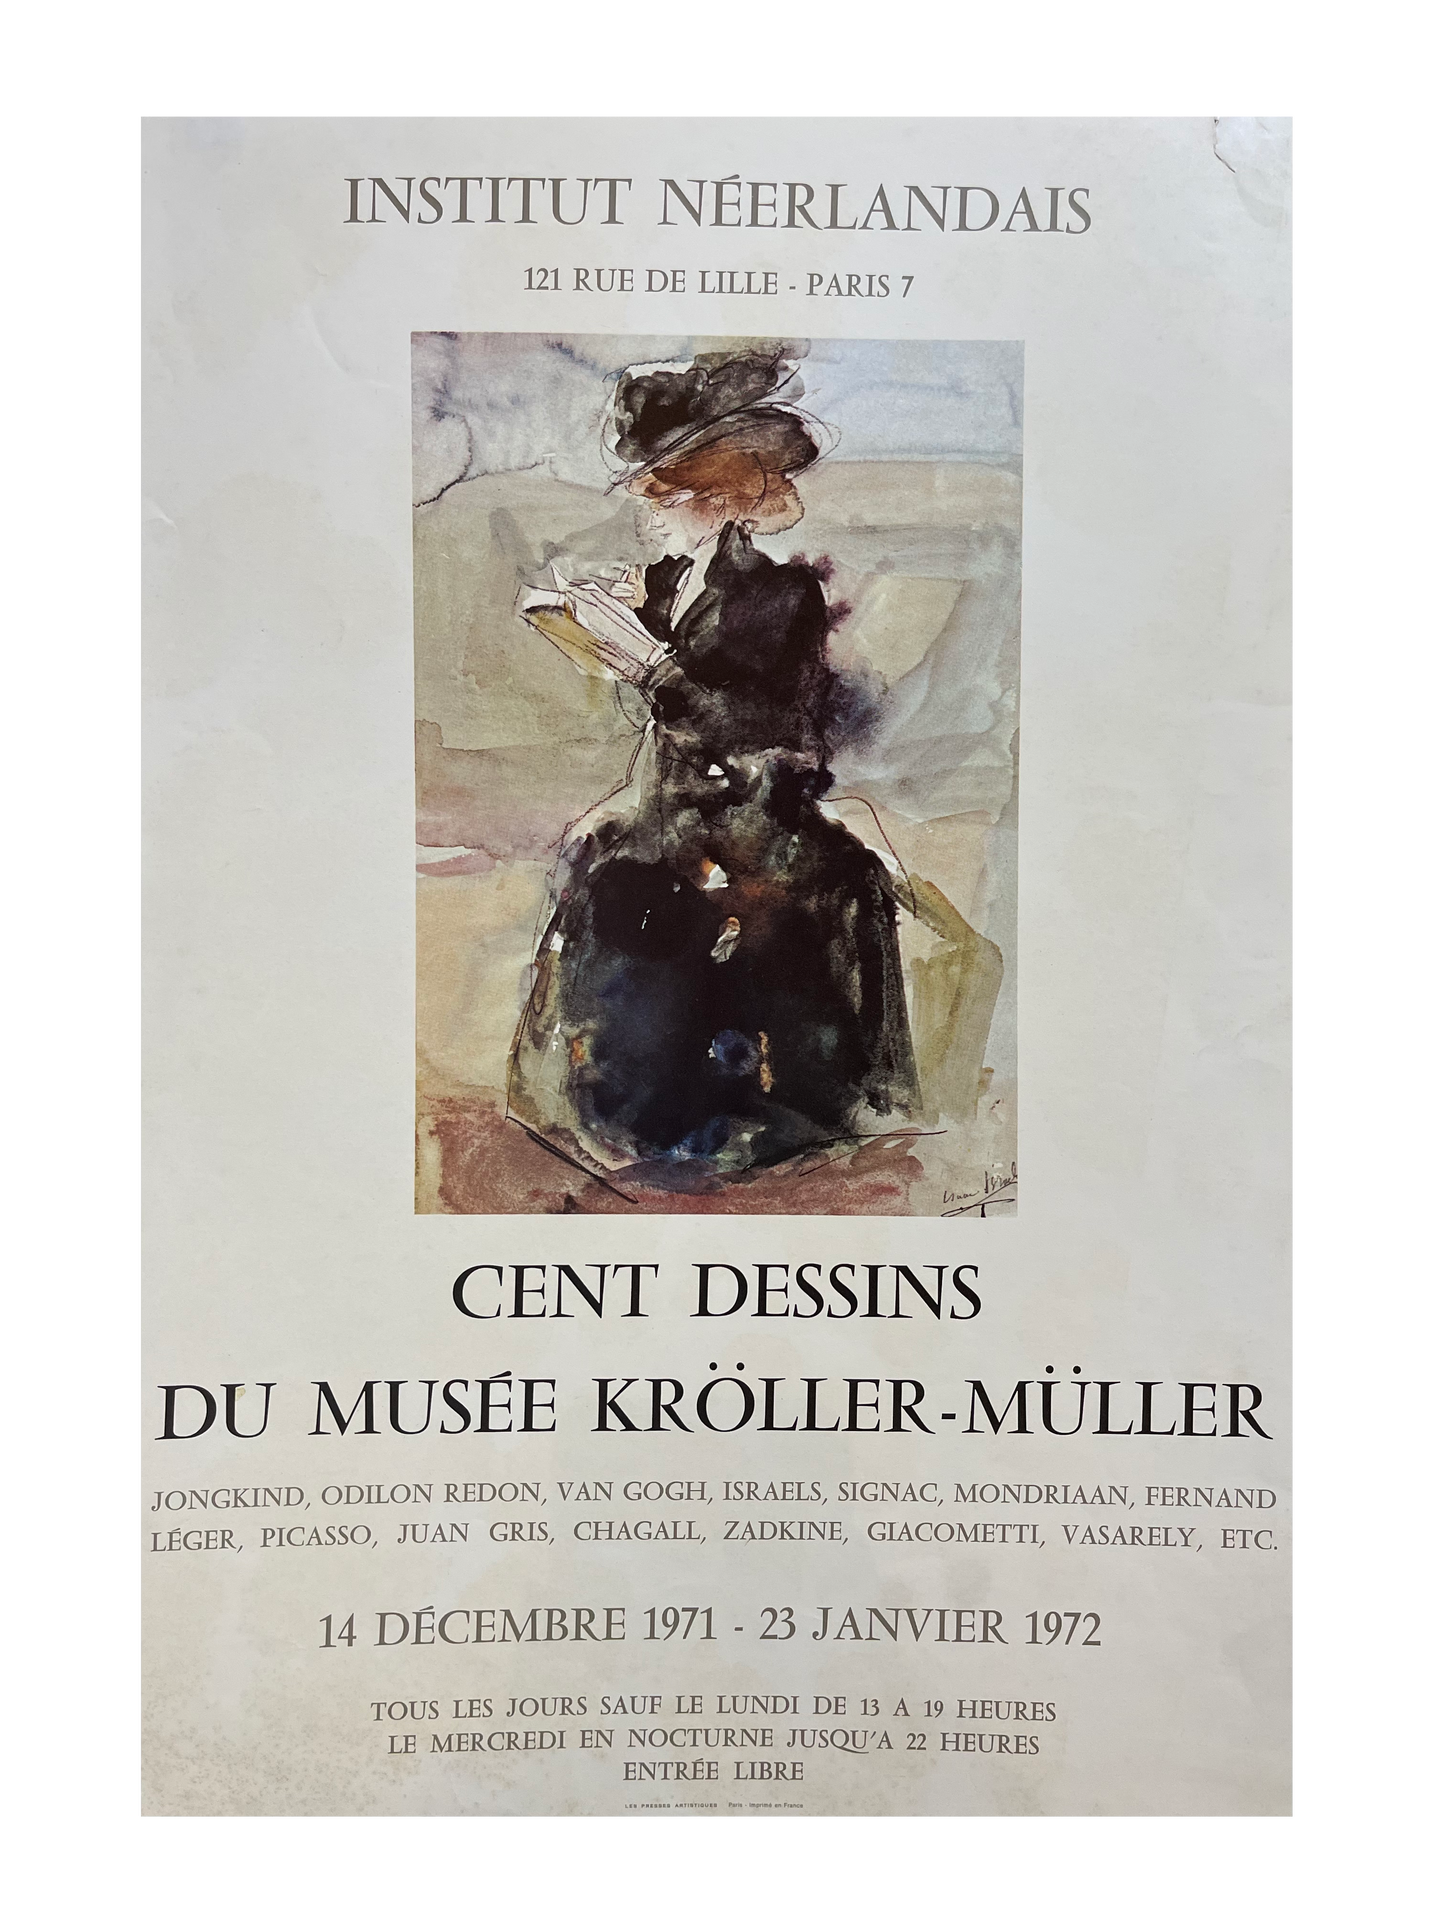 Netherlands Institute Kroller-Muller Exhibit Poster